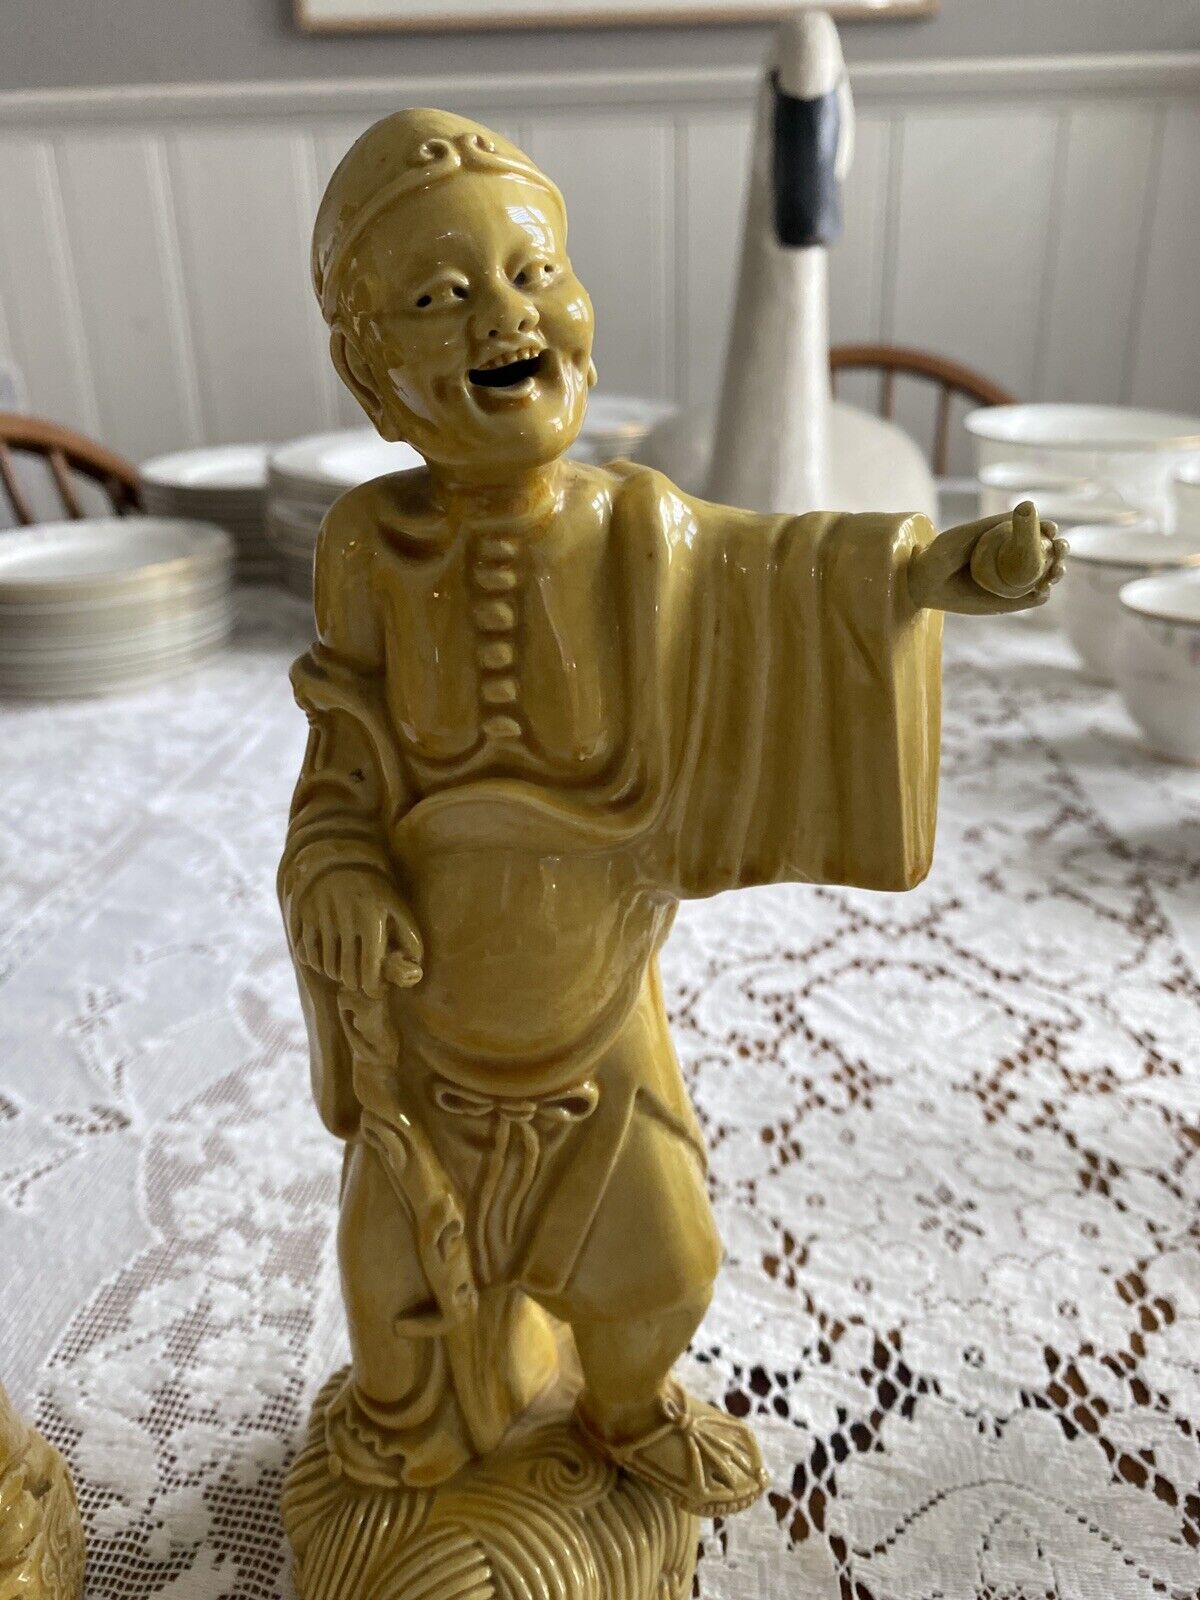 Vintage Chinese yellow figurines ceramic